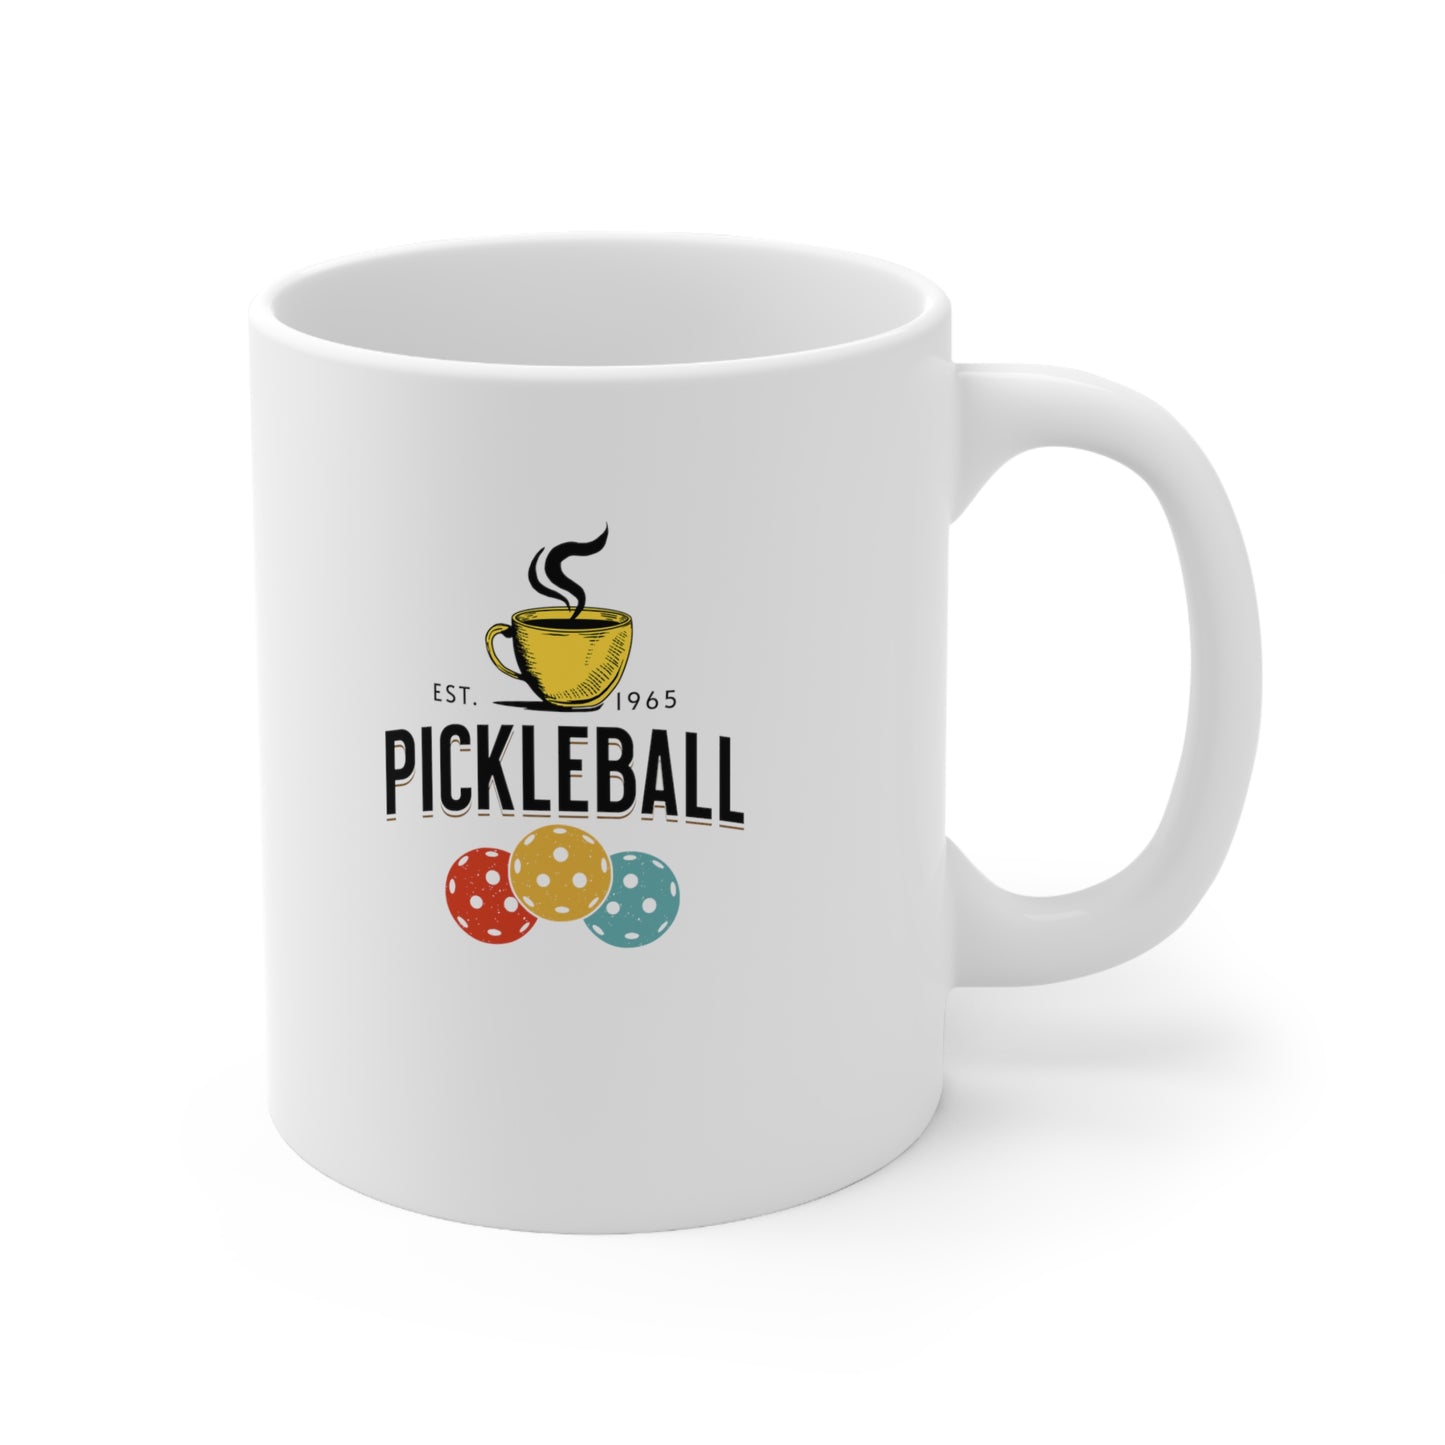 Pickleball Ceramic Mug: Celebrating the Sport Since 1965